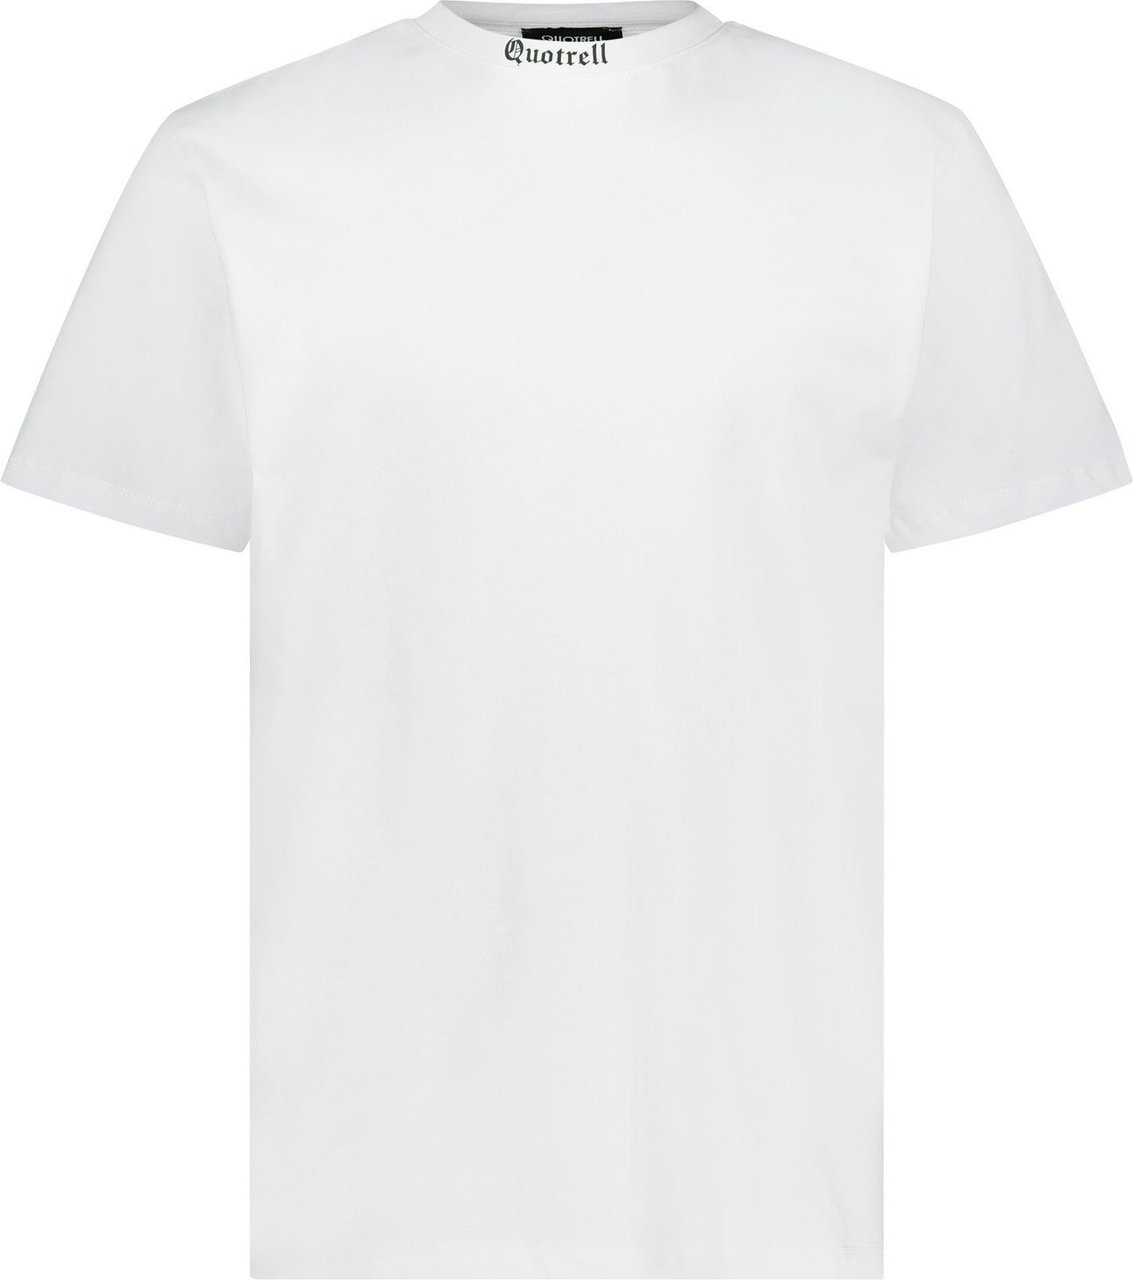 Quotrell Miami T-Shirt White Wit